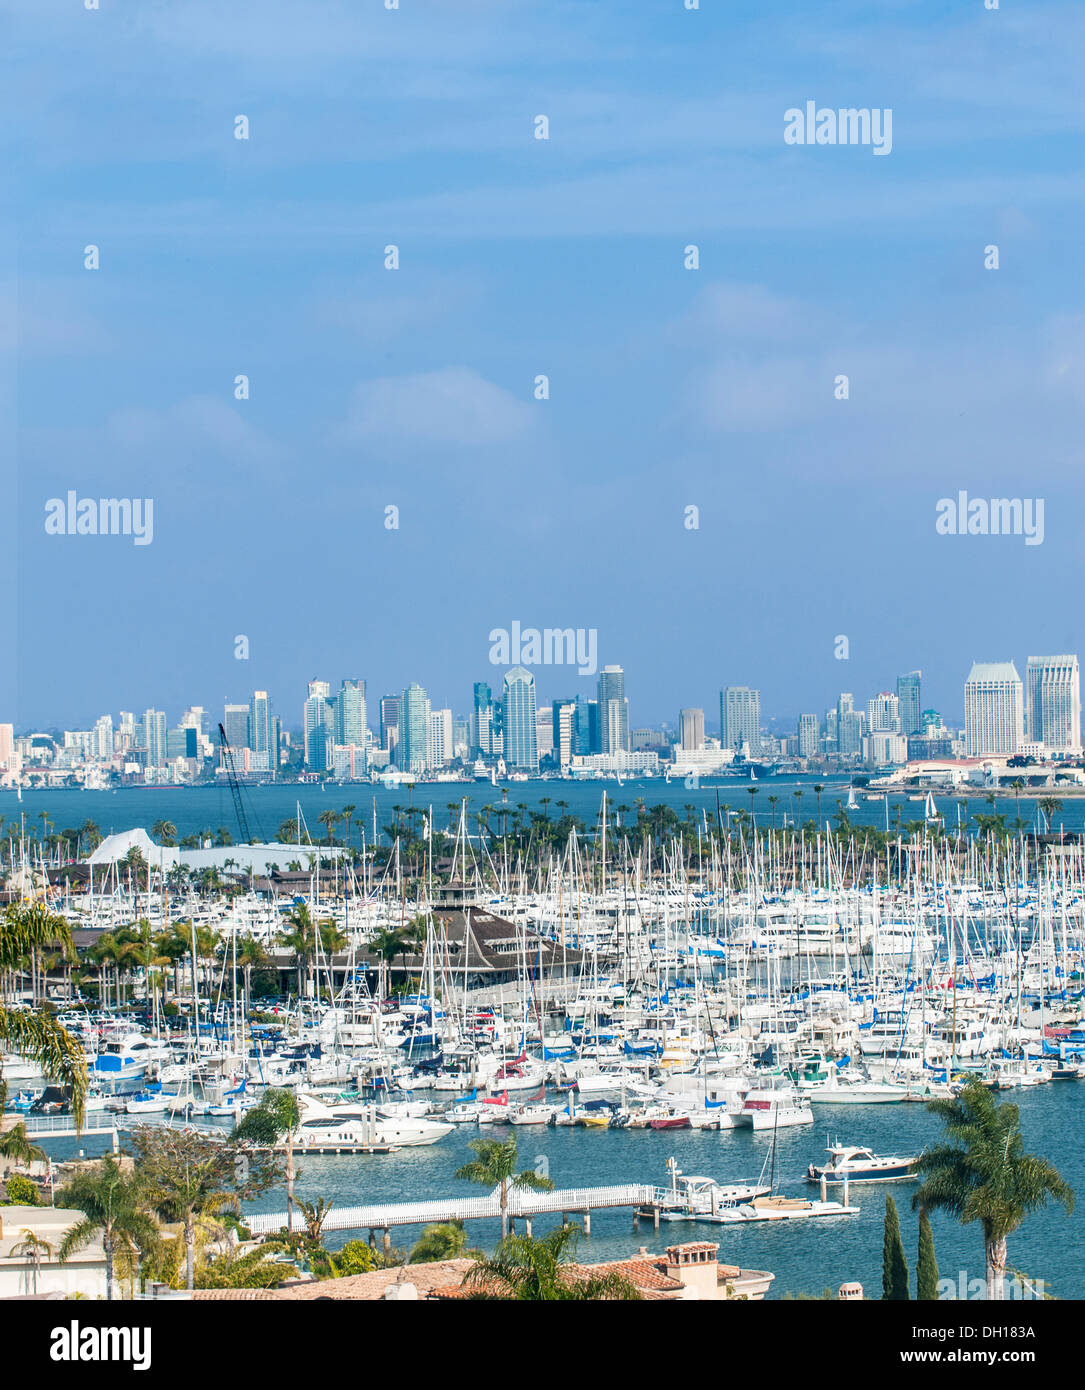 City skyline overlooking harbor, San Diego, California, United States Stock Photo